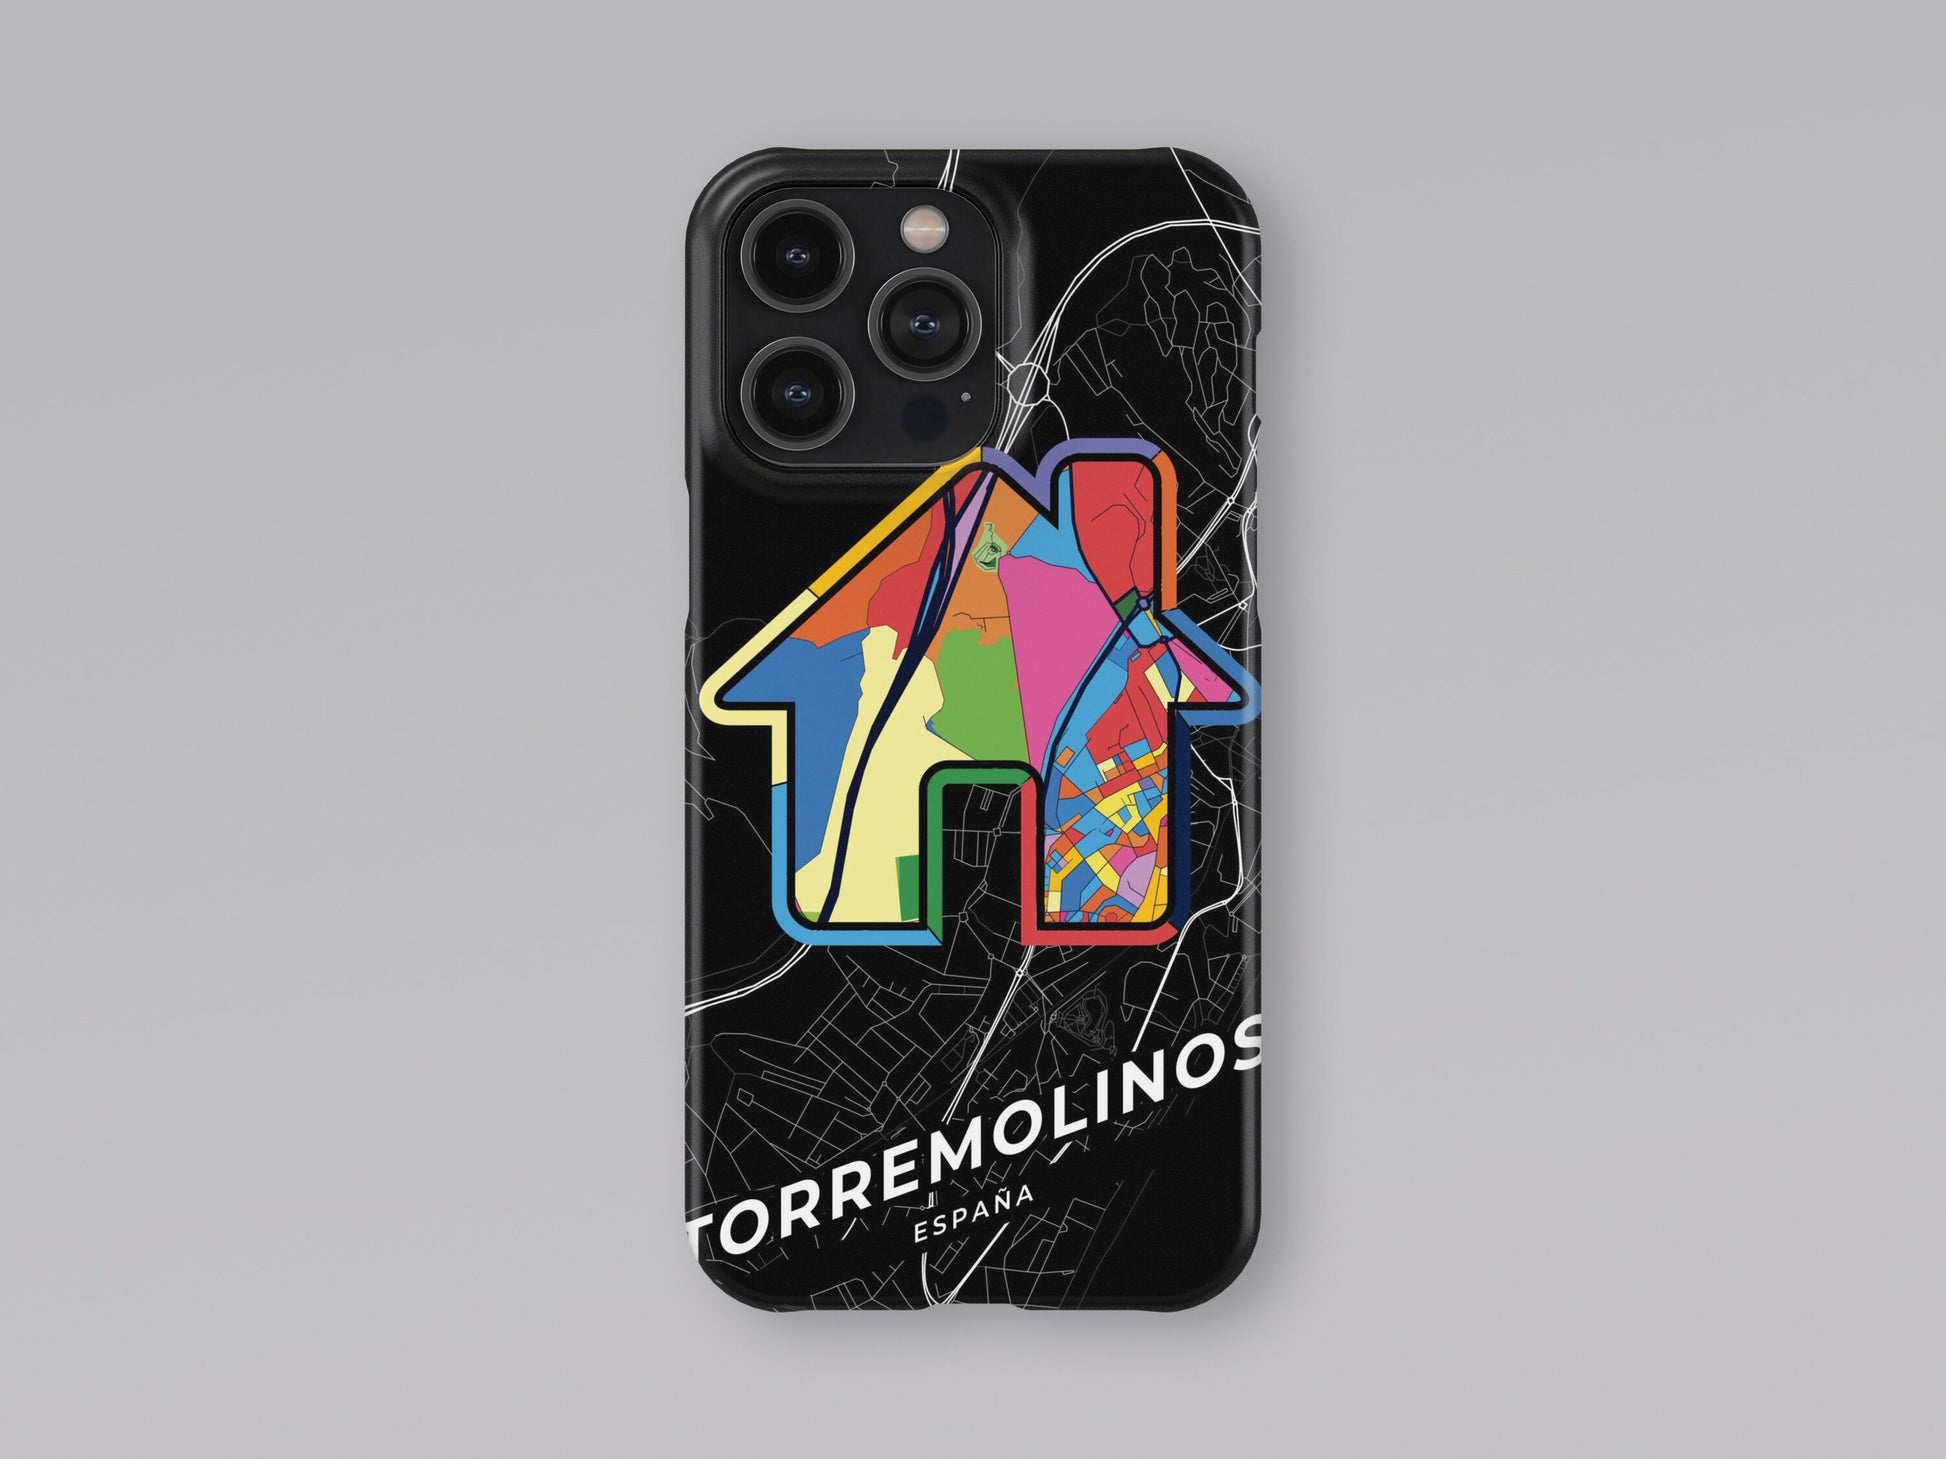 Torremolinos Spain slim phone case with colorful icon 3